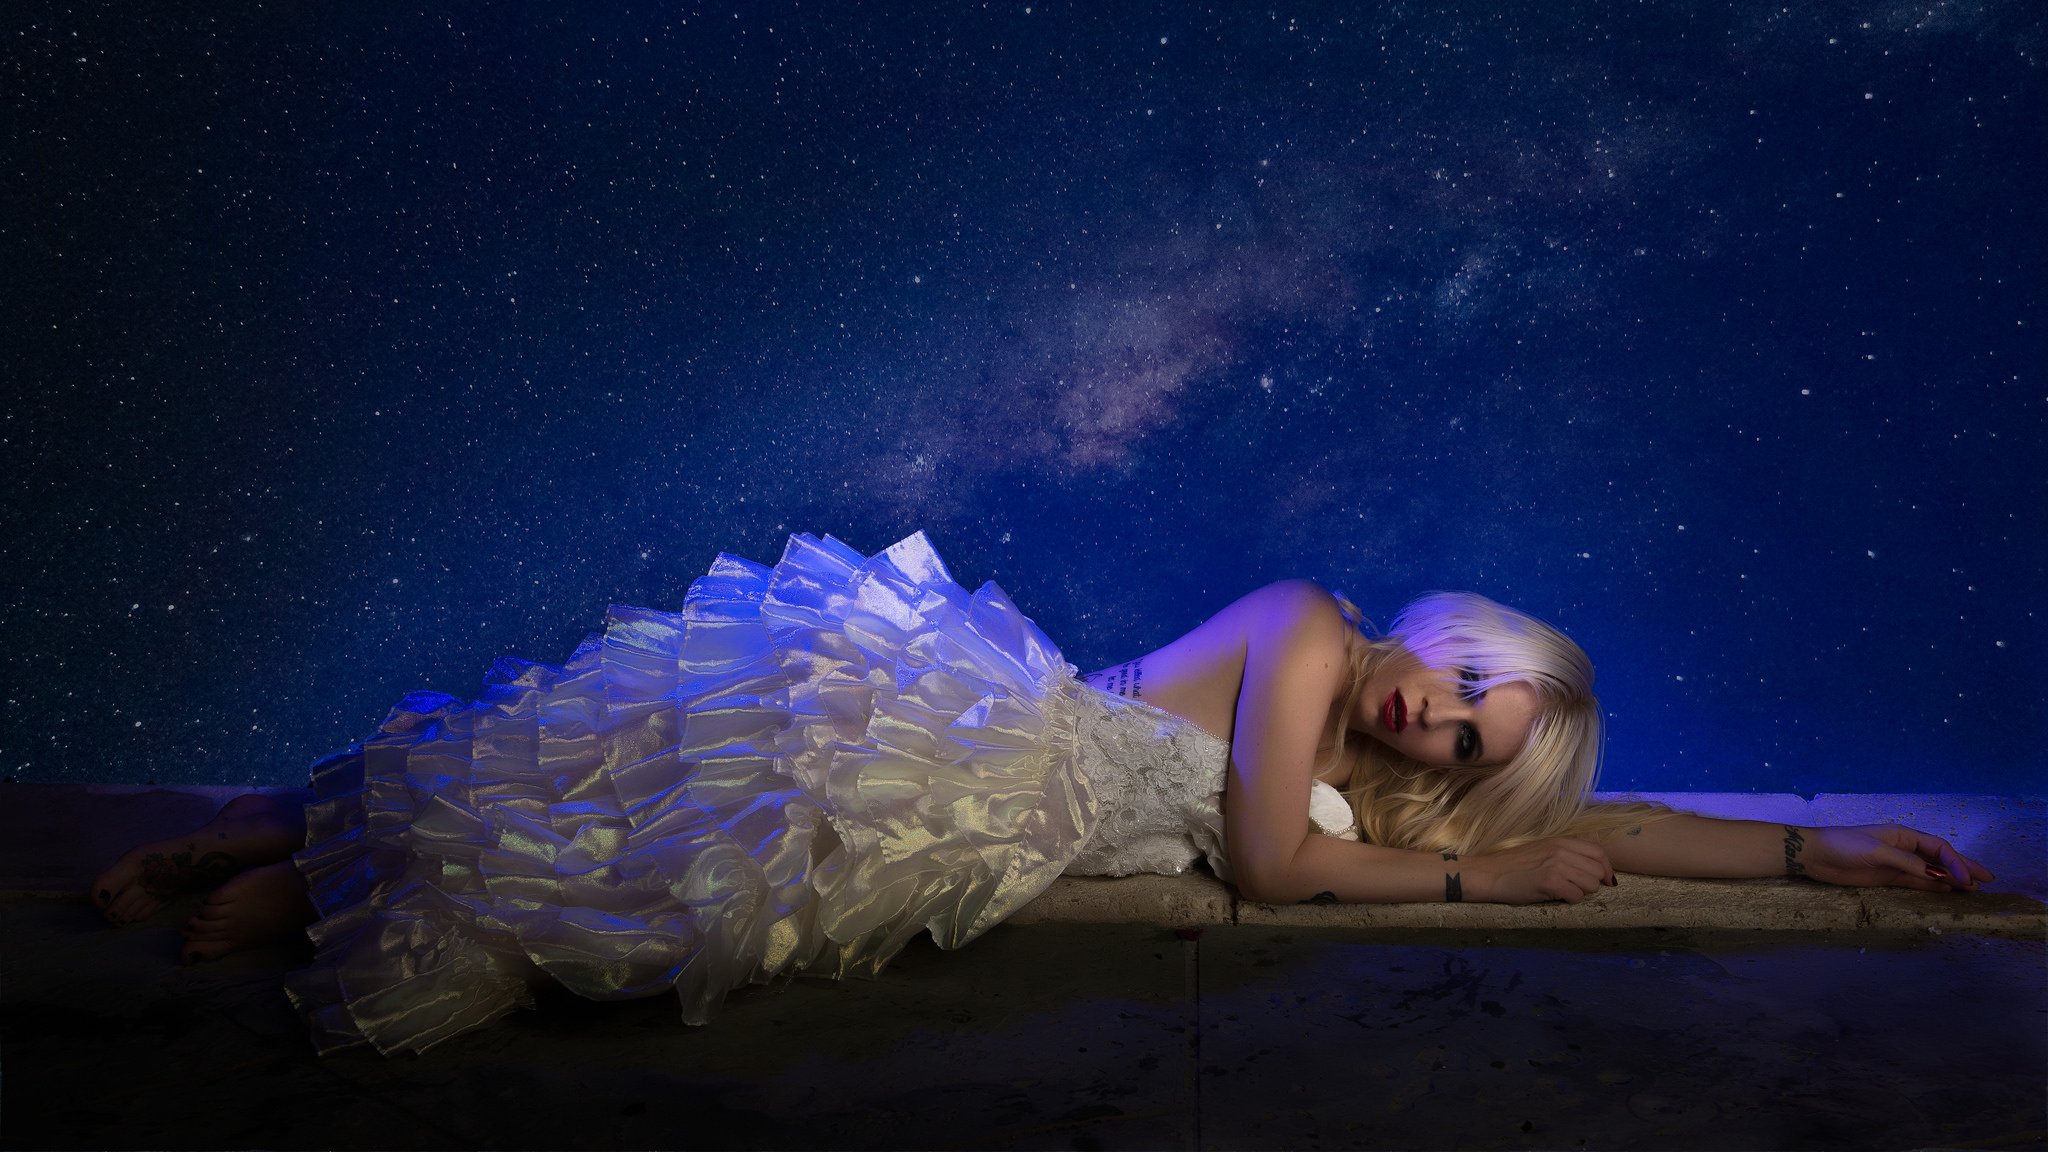 Night blonde. Звездная девушка. Девушка и звездное небо. Блондинка на фоне звездного неба. Платье звездное небо.